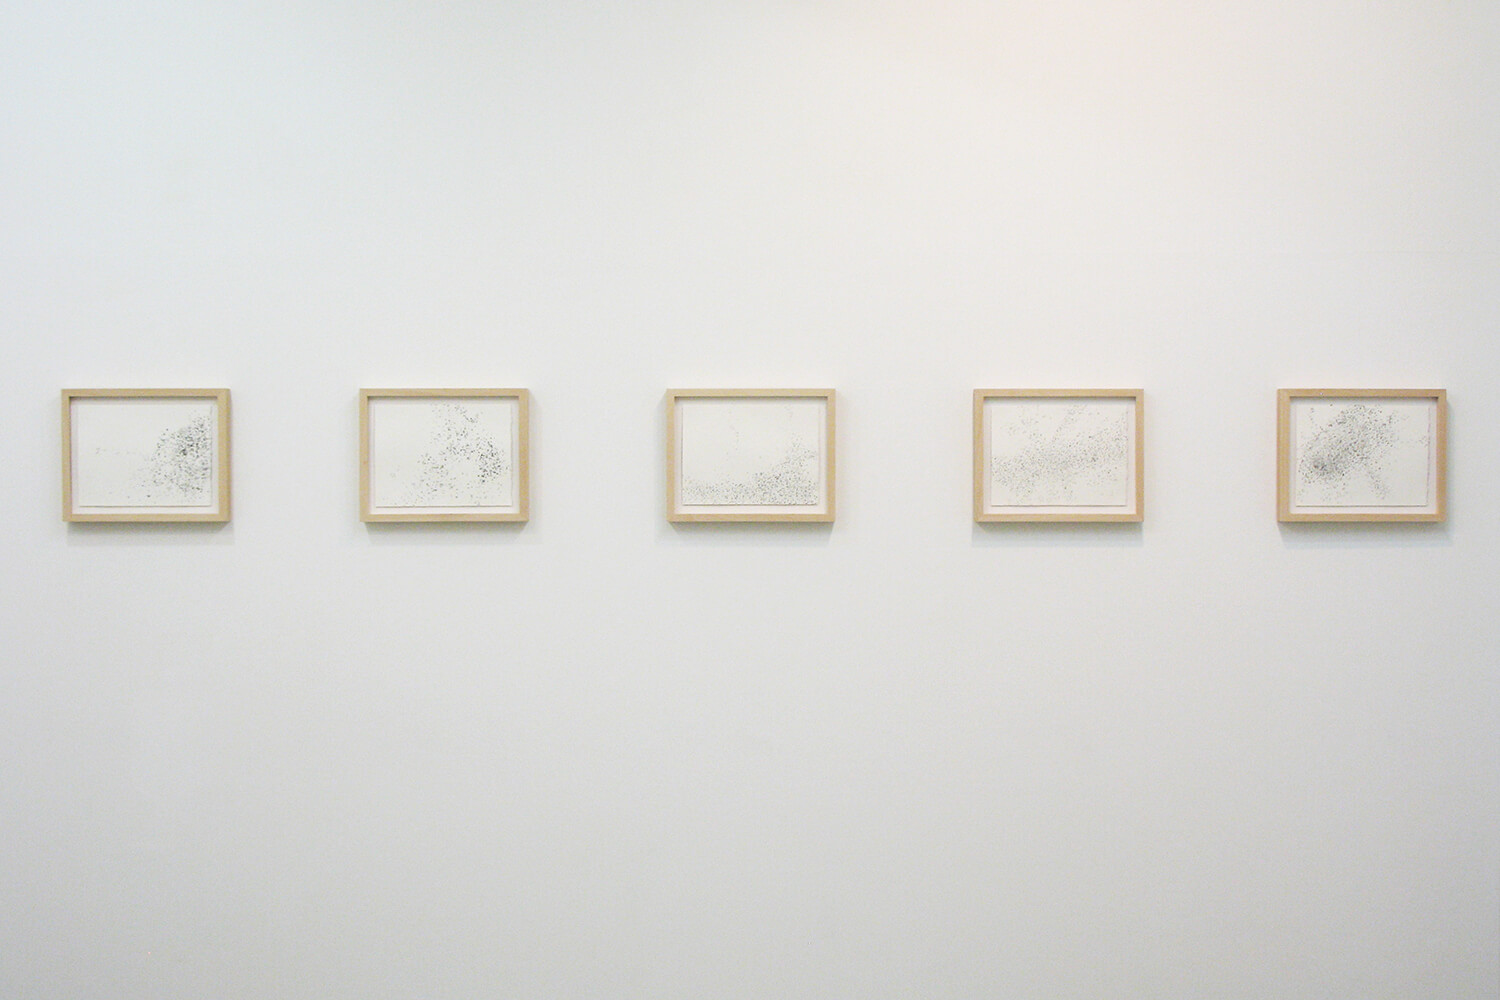 When the Dust Settles<br>Acrylic on paper, 17 x 23.5 cm, 2011 (each)